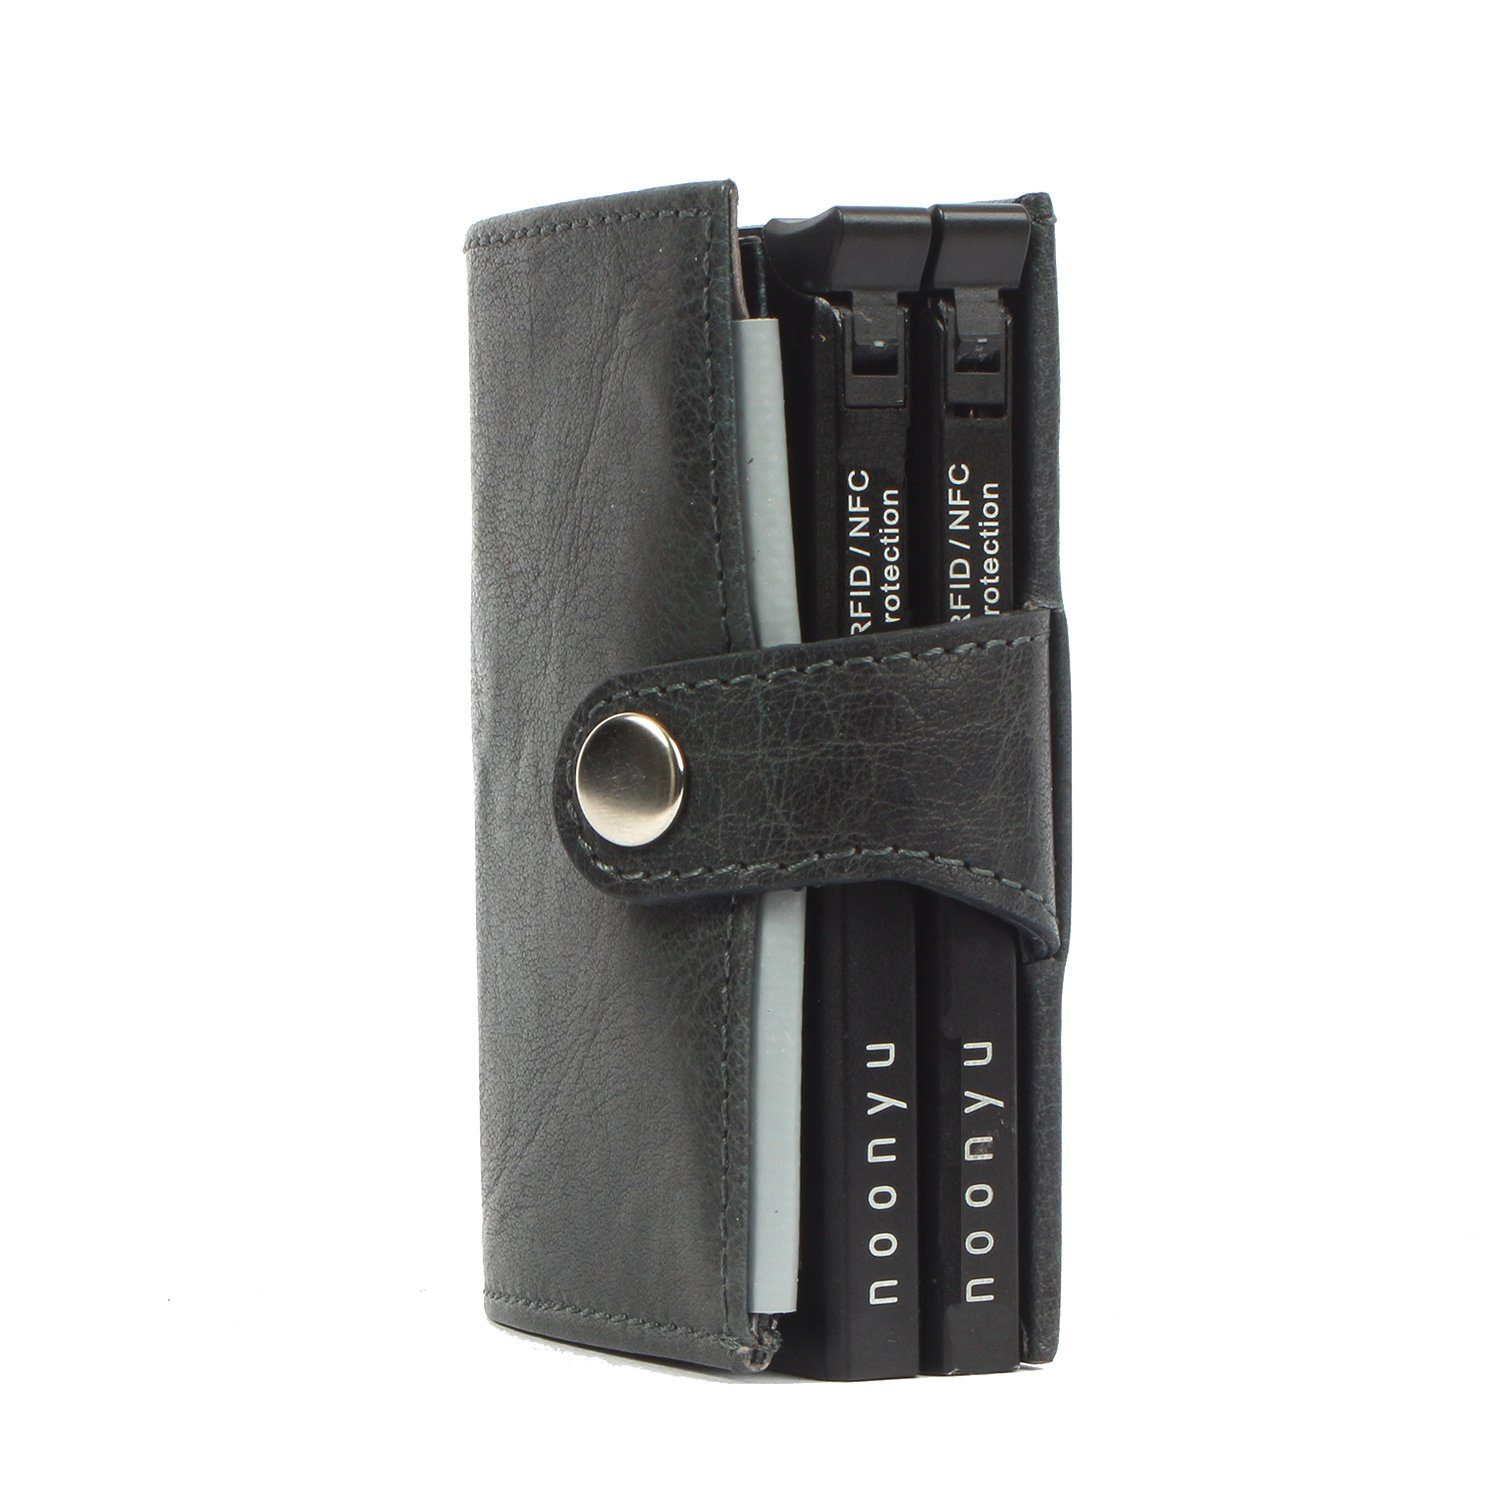 Margelisch Mini Geldbörse noonyu double aus leather, RFID steelblue Leder Upcycling Kreditkartenbörse